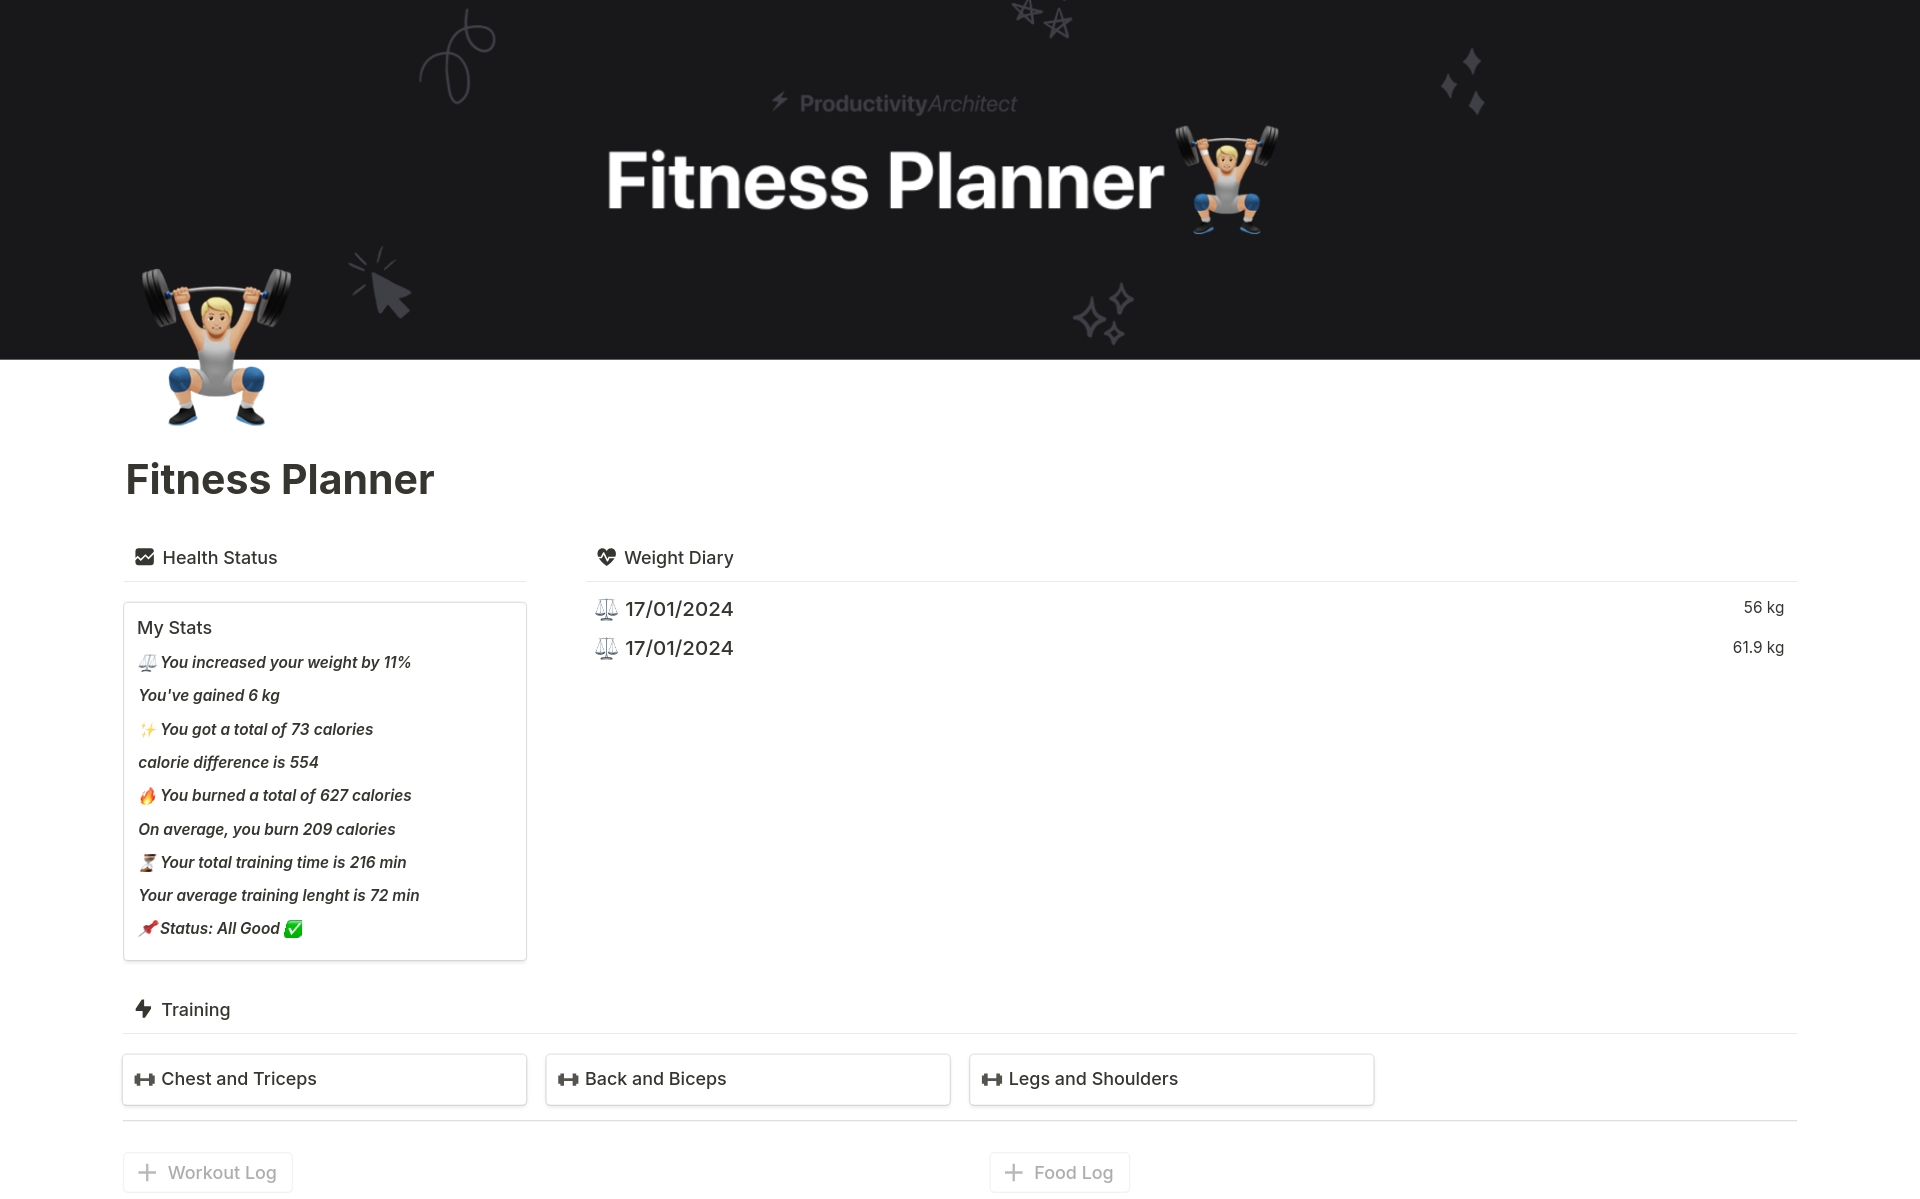 Vista previa de una plantilla para Fitness Planner